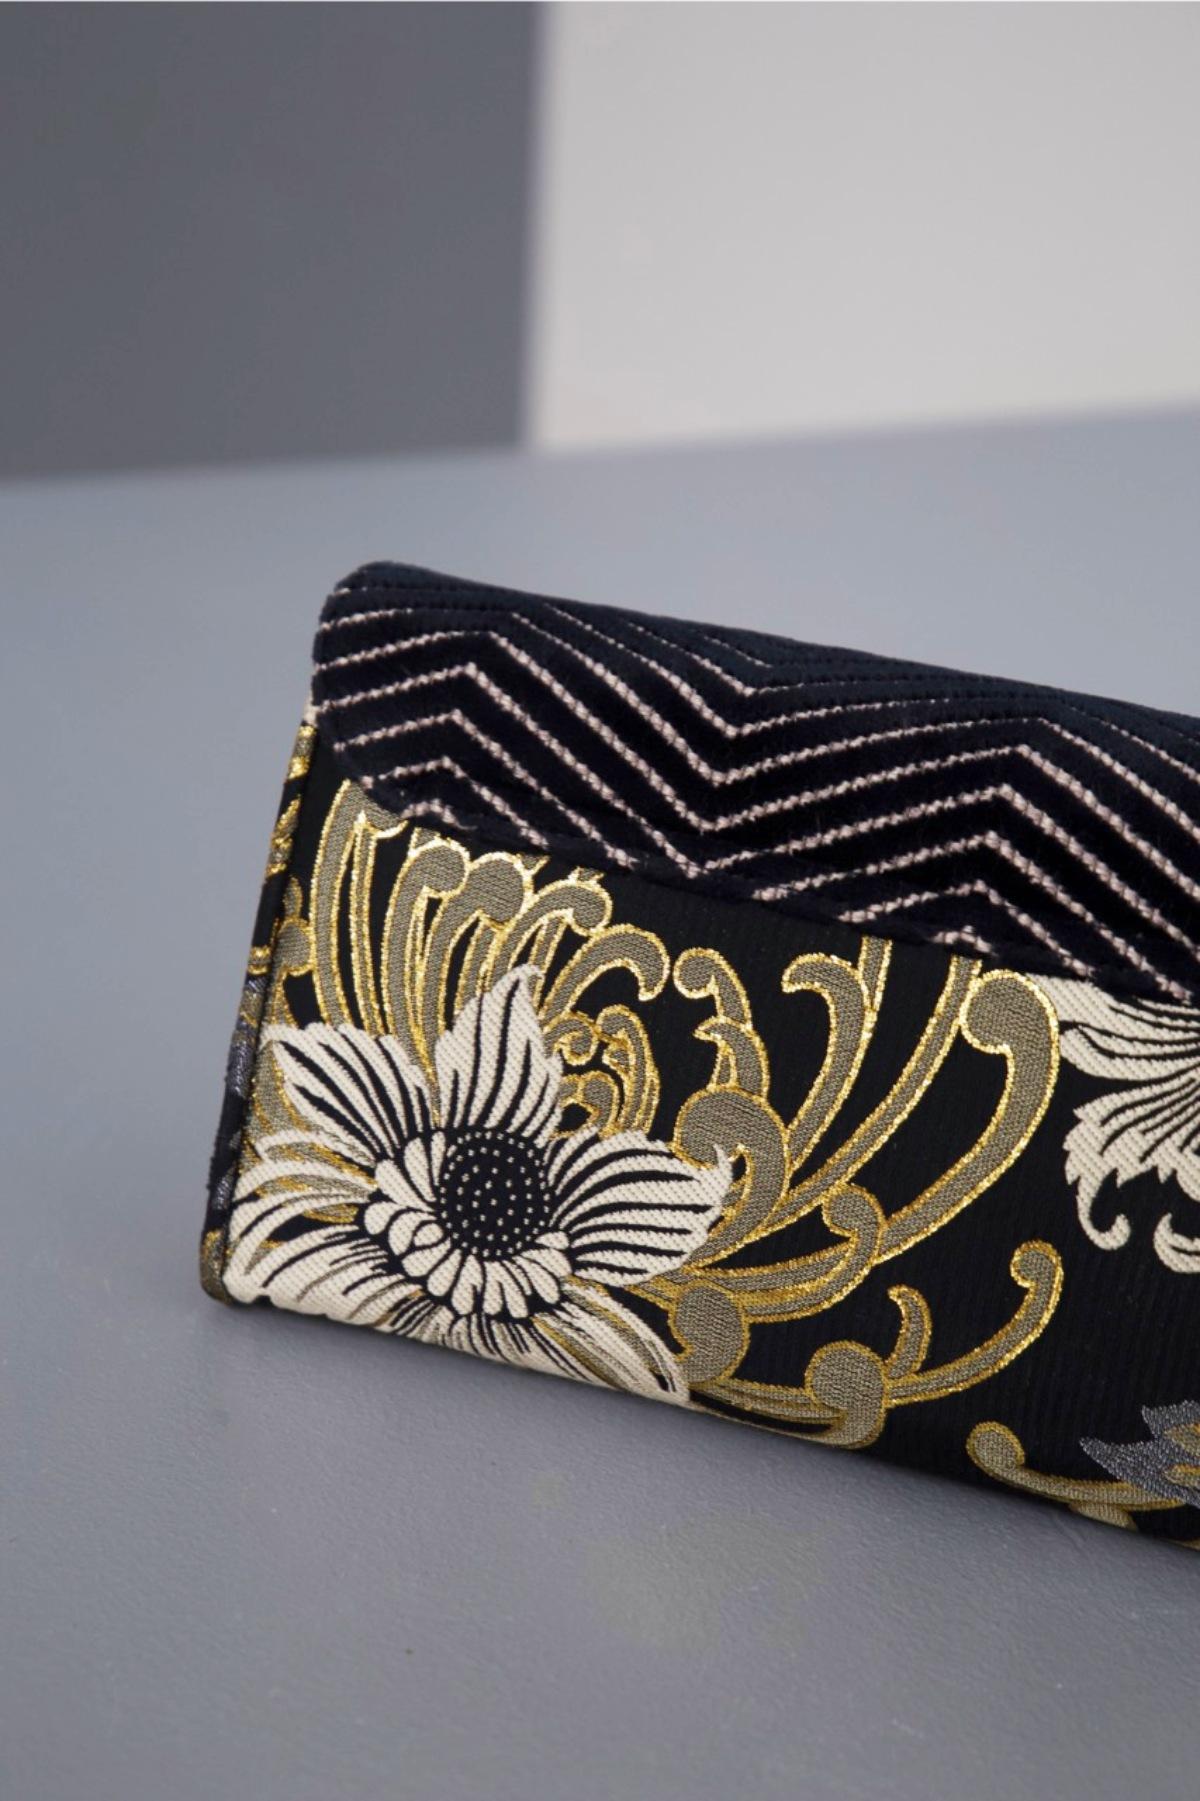 Bulgari Damen-Clutch Bag mit goldenen floralen Details 6